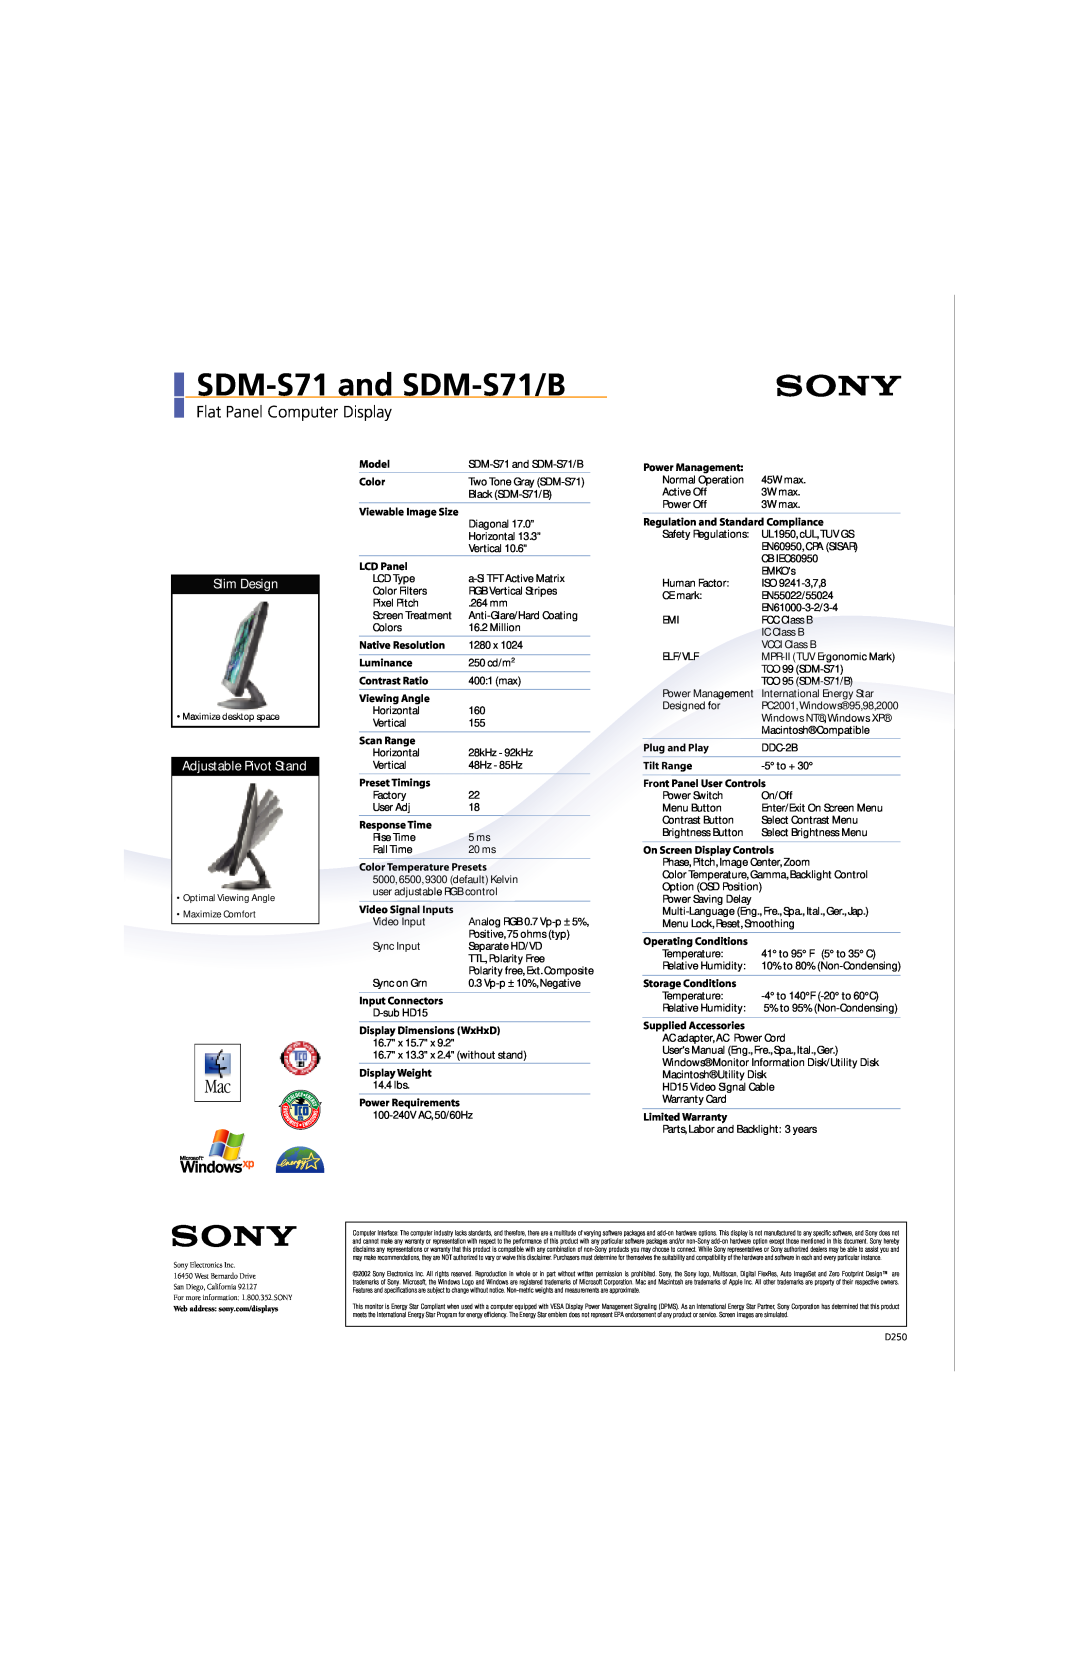 Sony manual SDM-S71 and SDM-S71/B, Flat Panel Computer Display, Slim Design, Adjustable Pivot Stand 4 Port USB Hub 